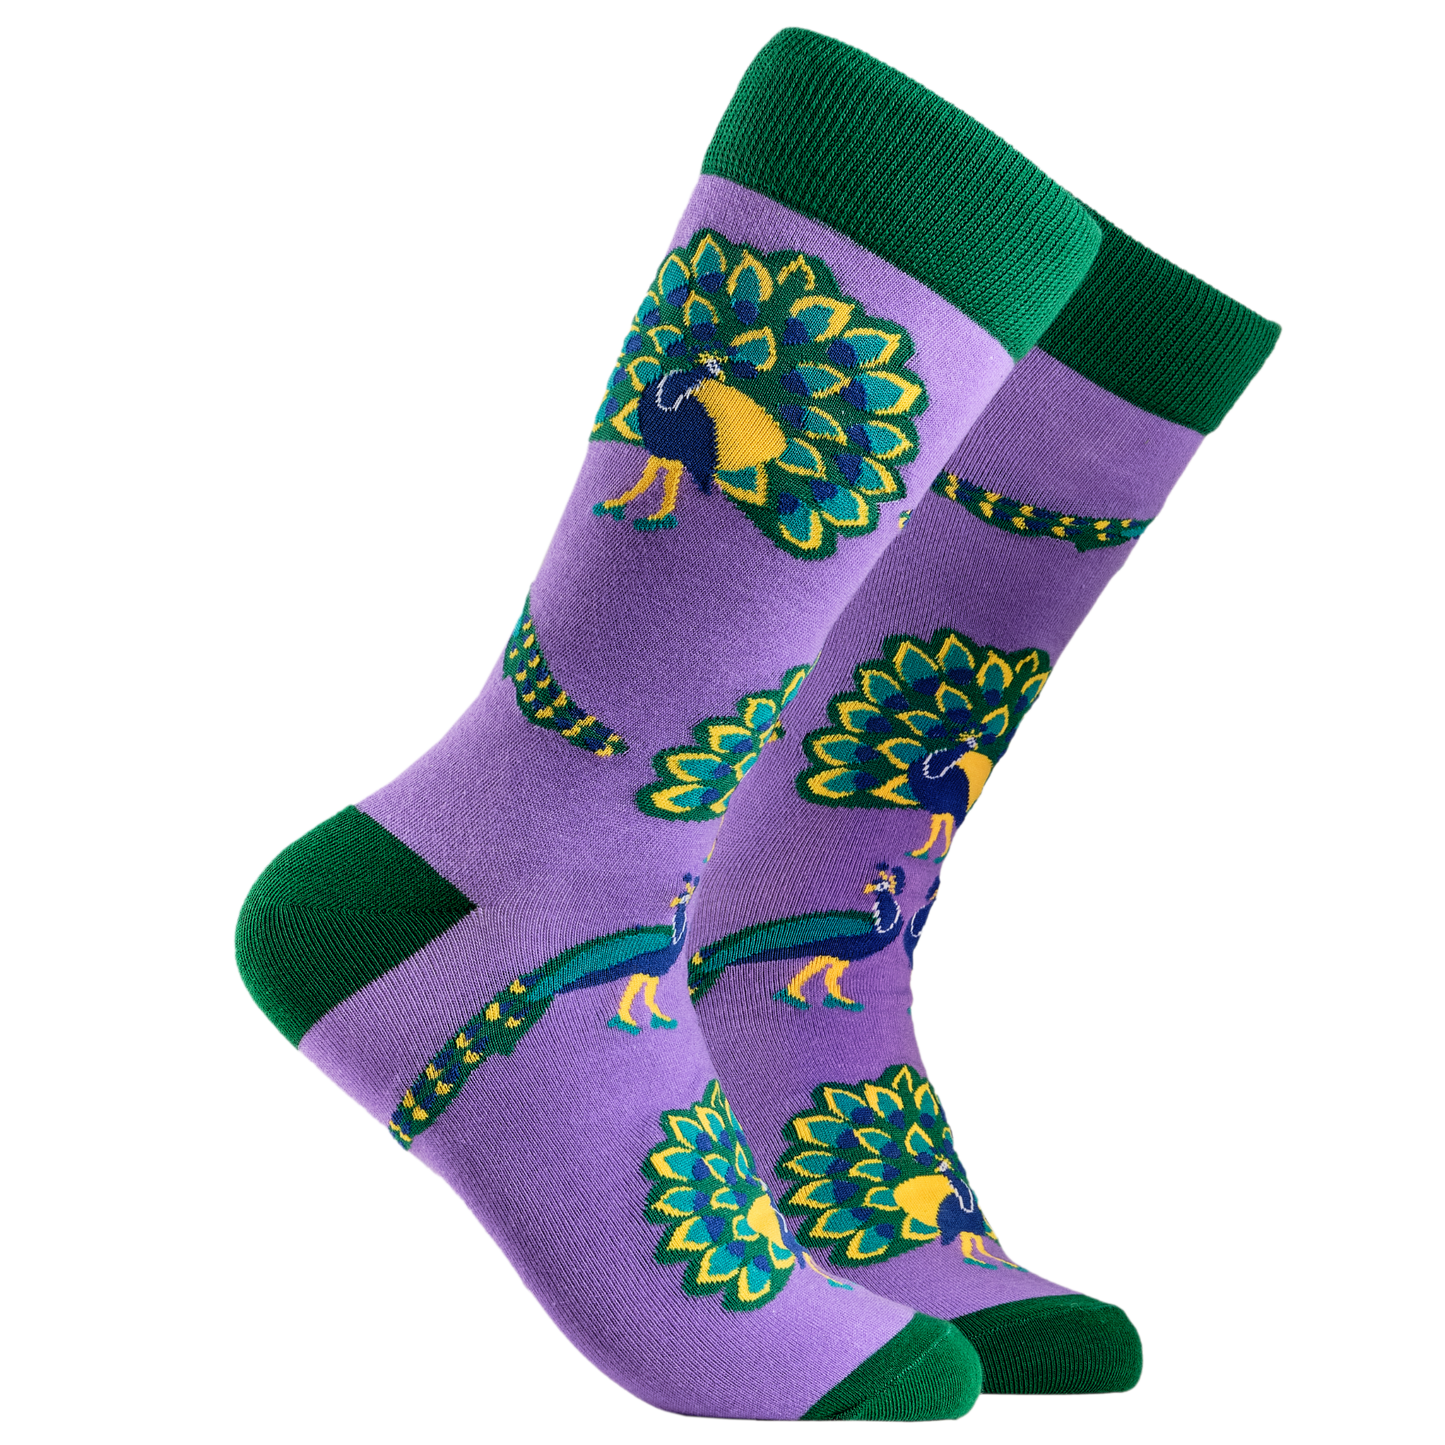 Party Peacocks Socks. A pair of socks depicting peacocks. Purple legs, green cuff, heel and toe.